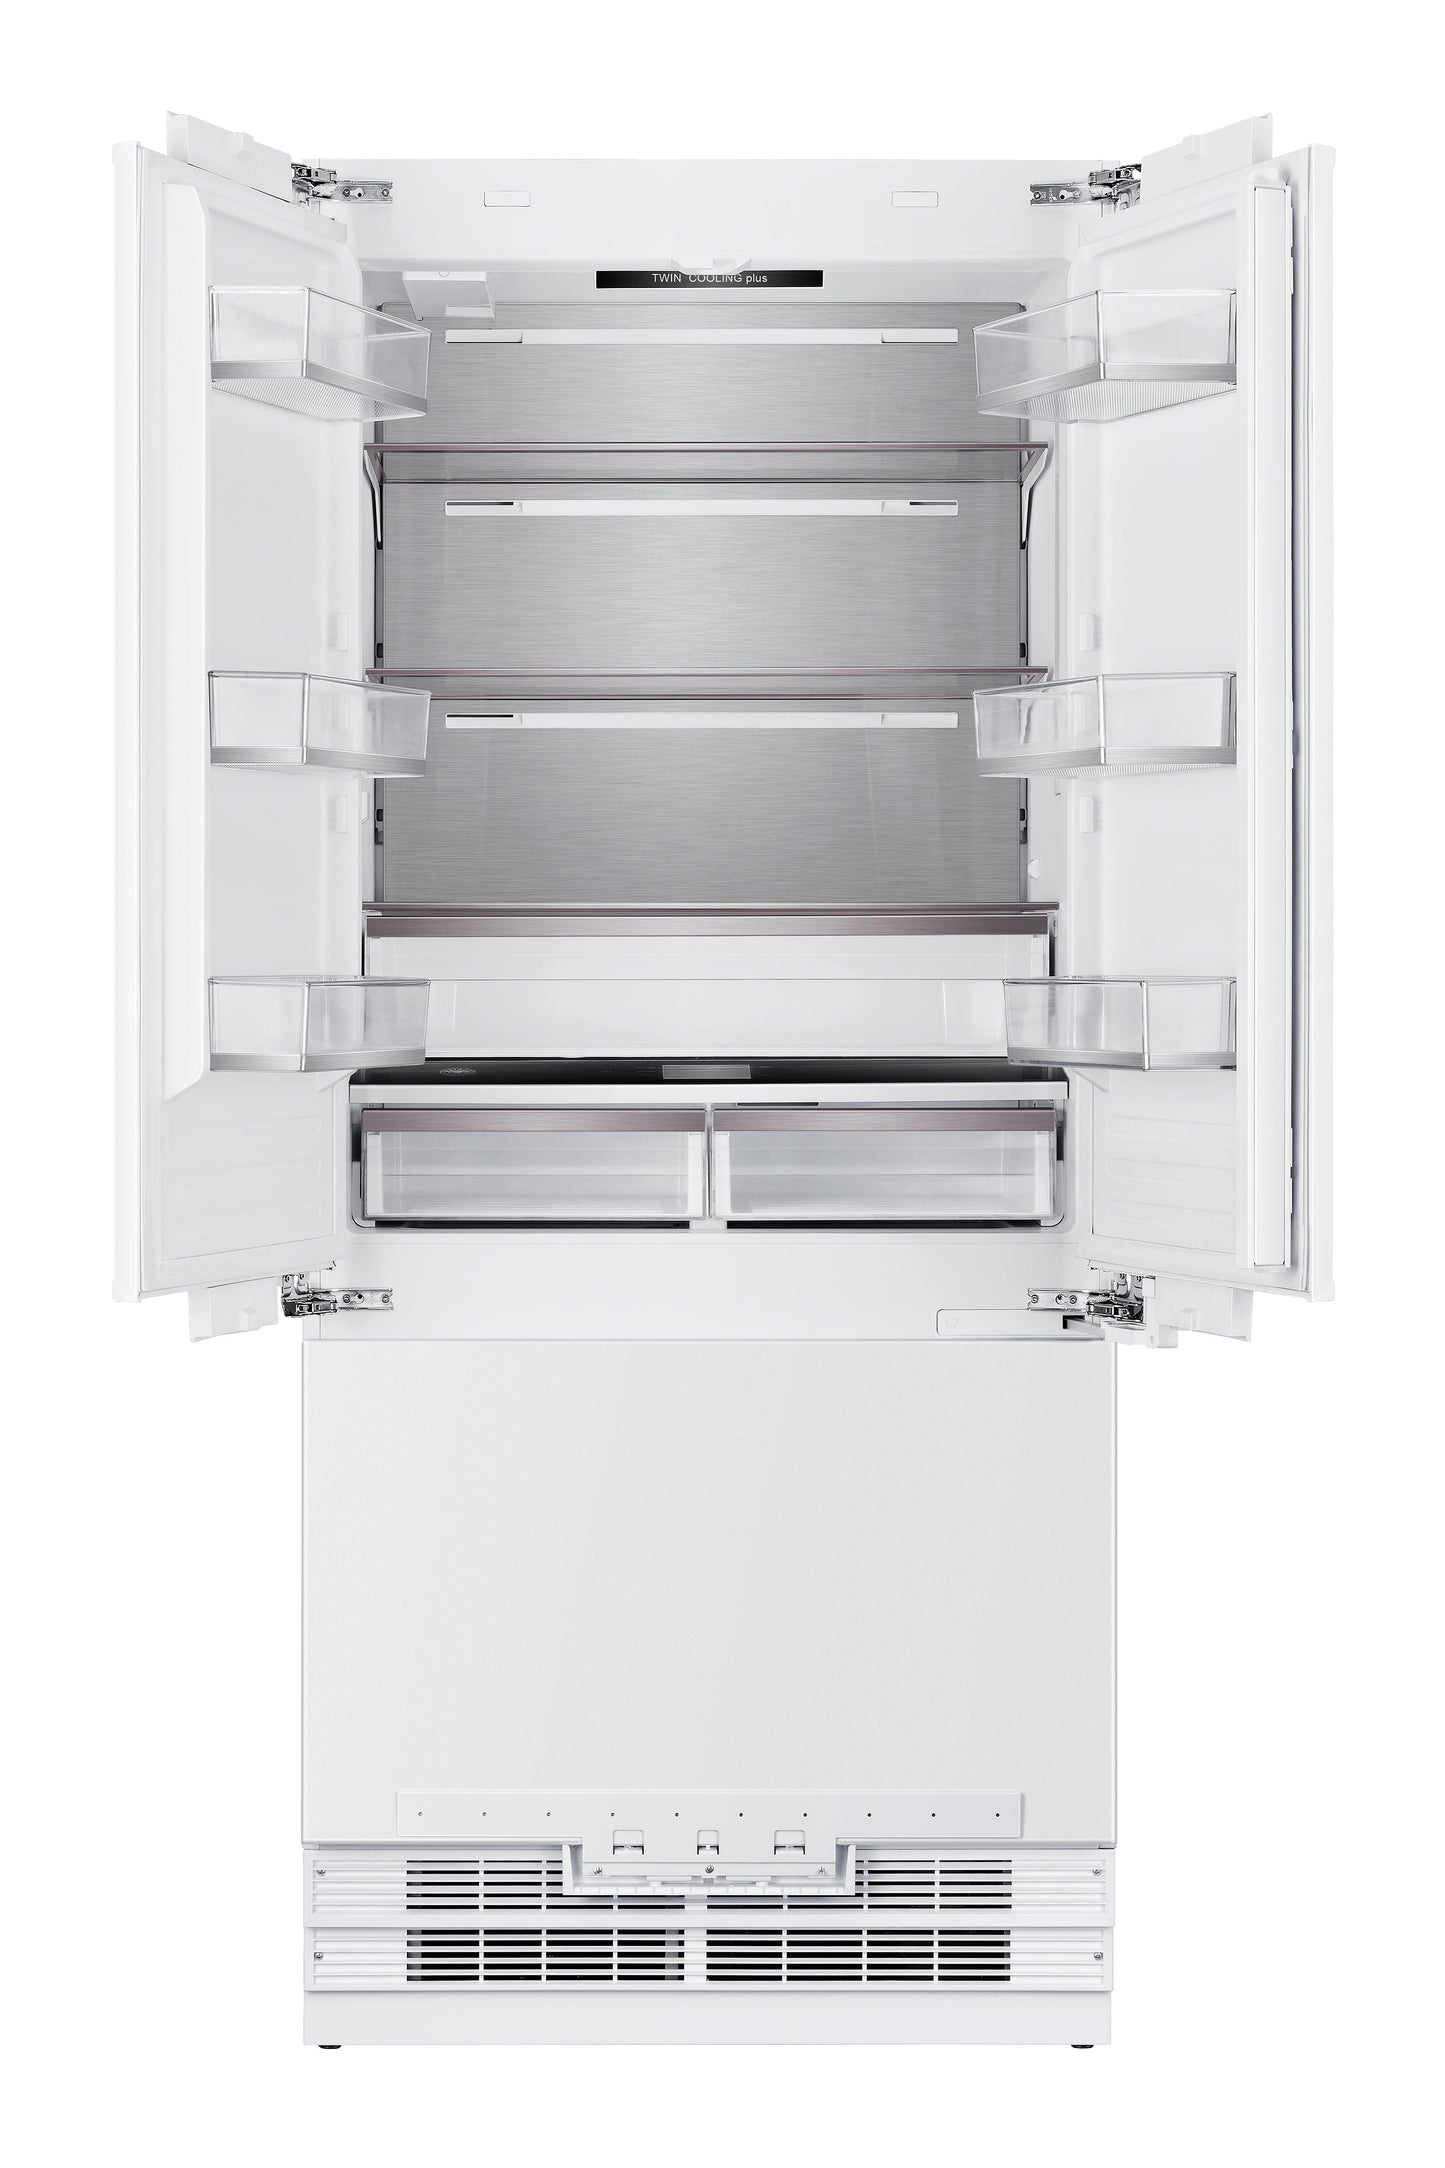 Kucht 36” Built-In, Counter Depth, Panel Ready, French Door Refrigerator KR365FD